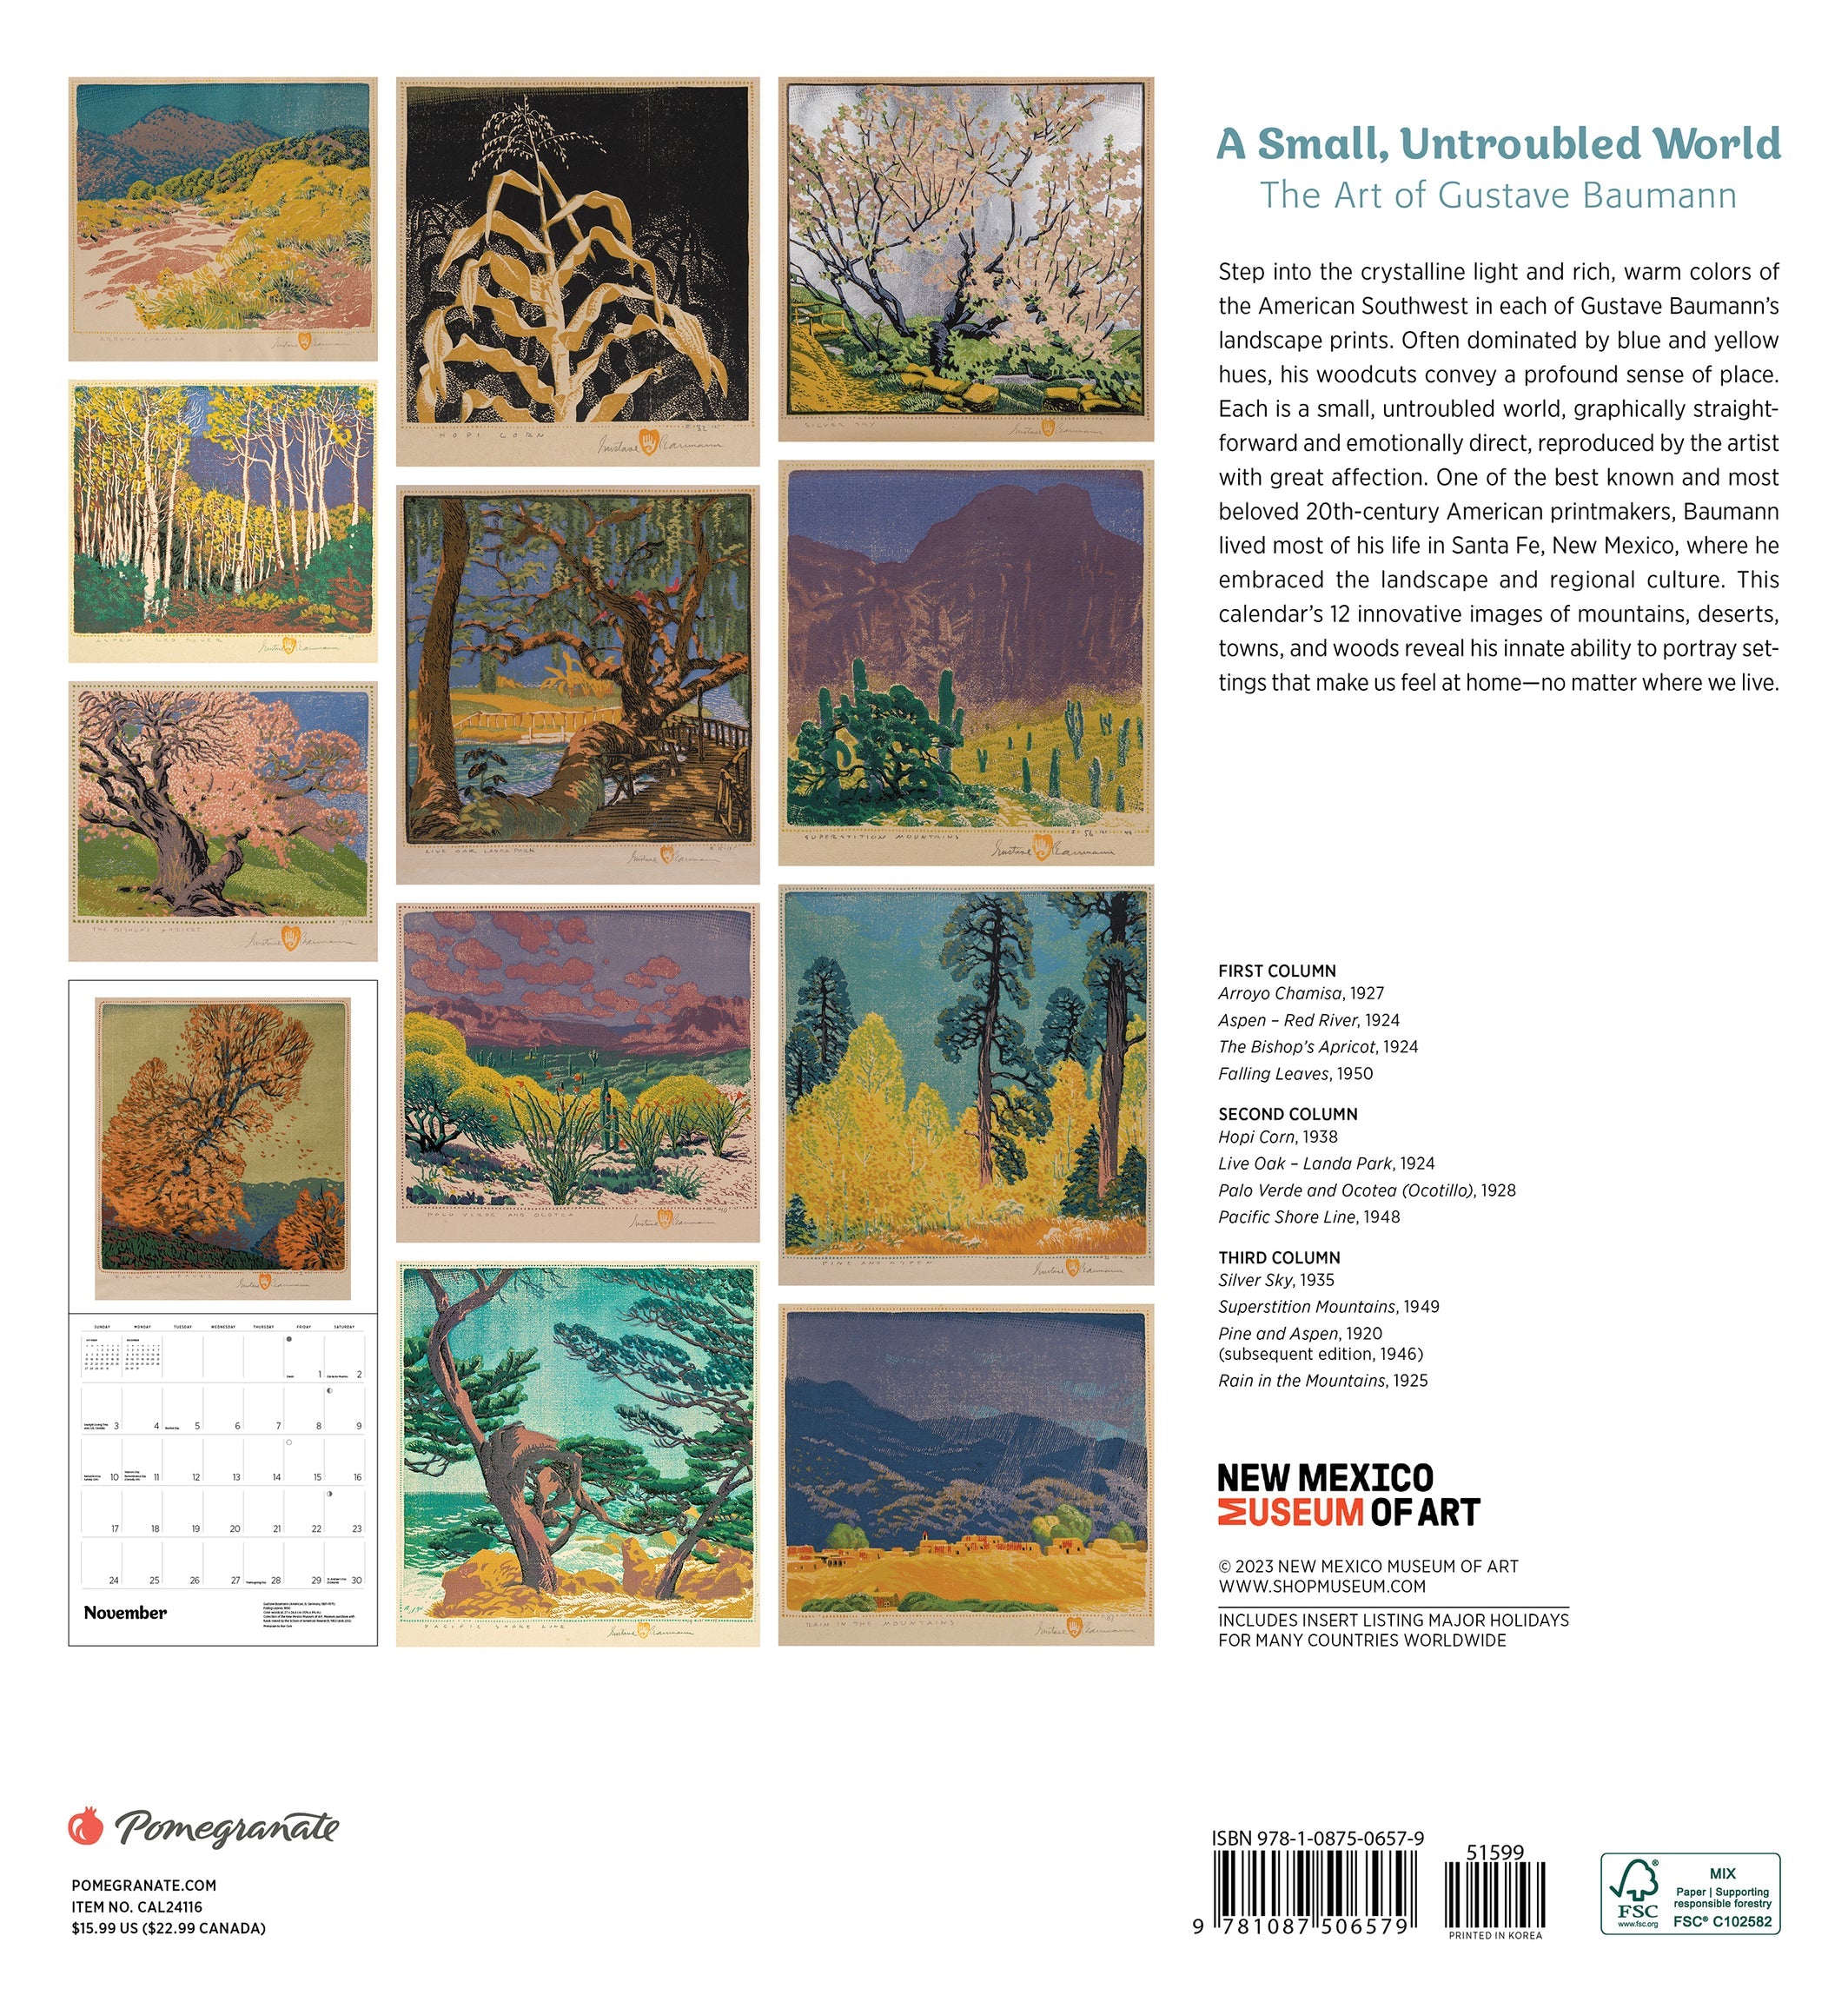 A Small, Untroubled World - The Art of Gustave Baumann 2024 Wall Calendar    